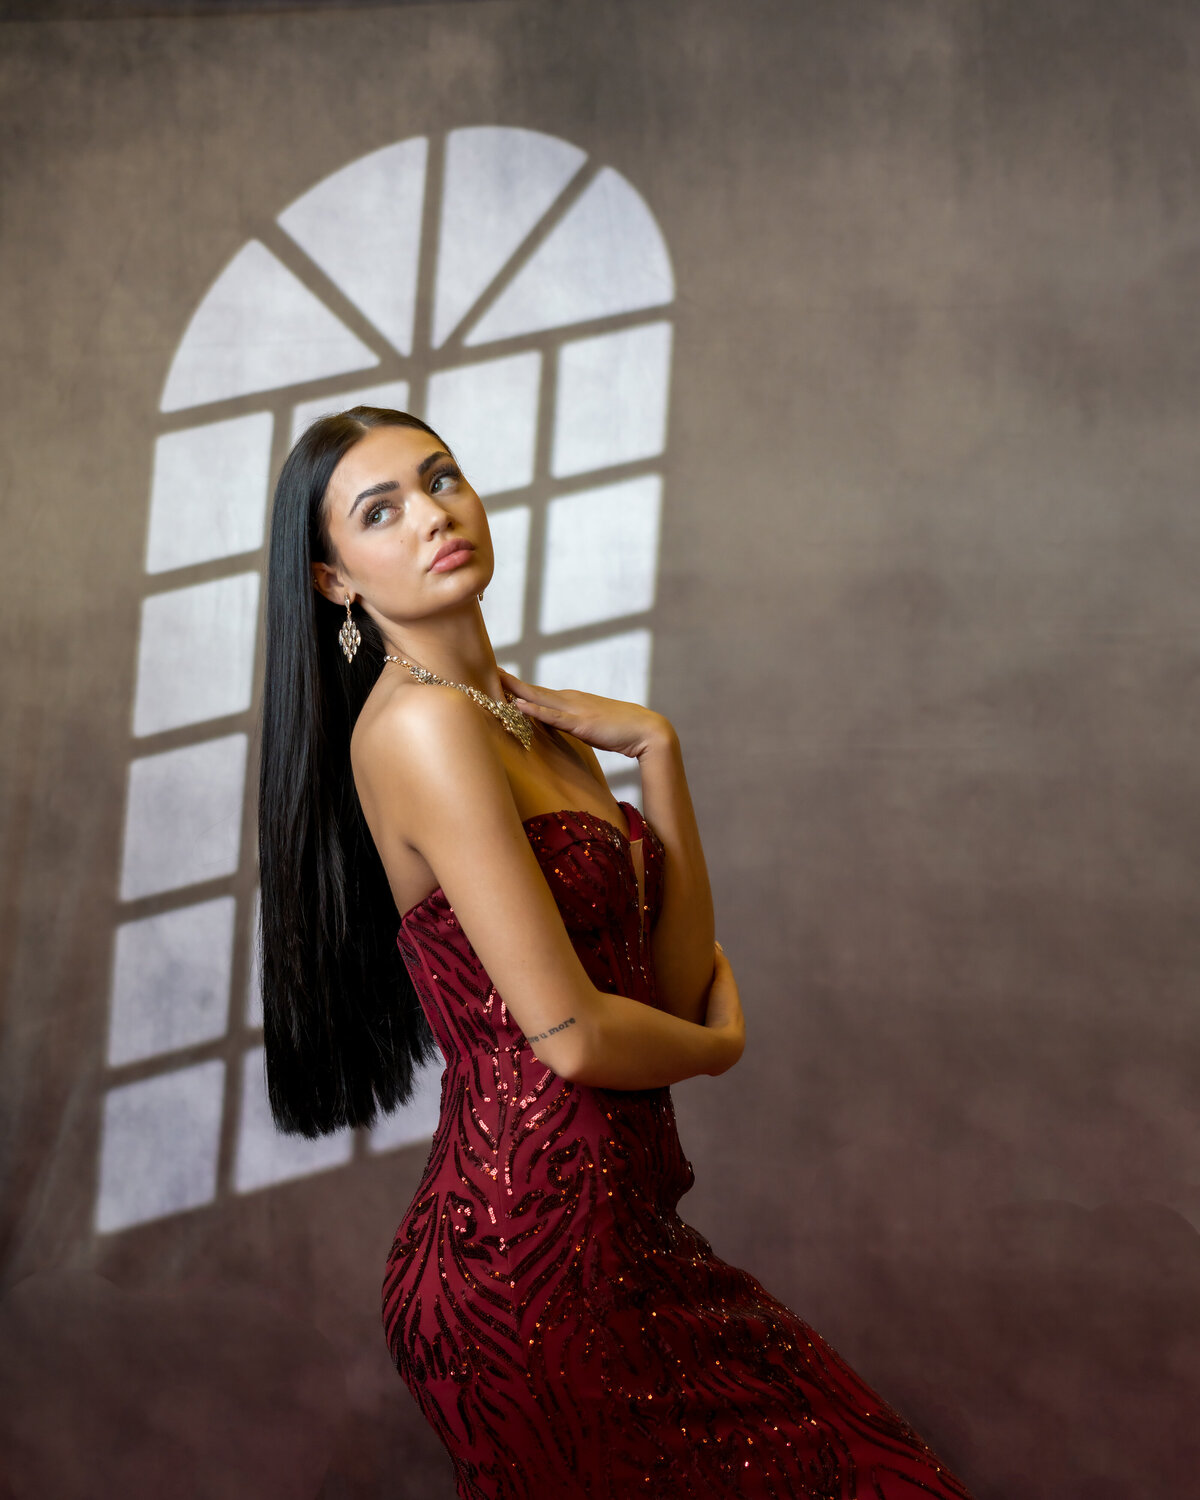 Female Model Red Dress Window Accent Portrait